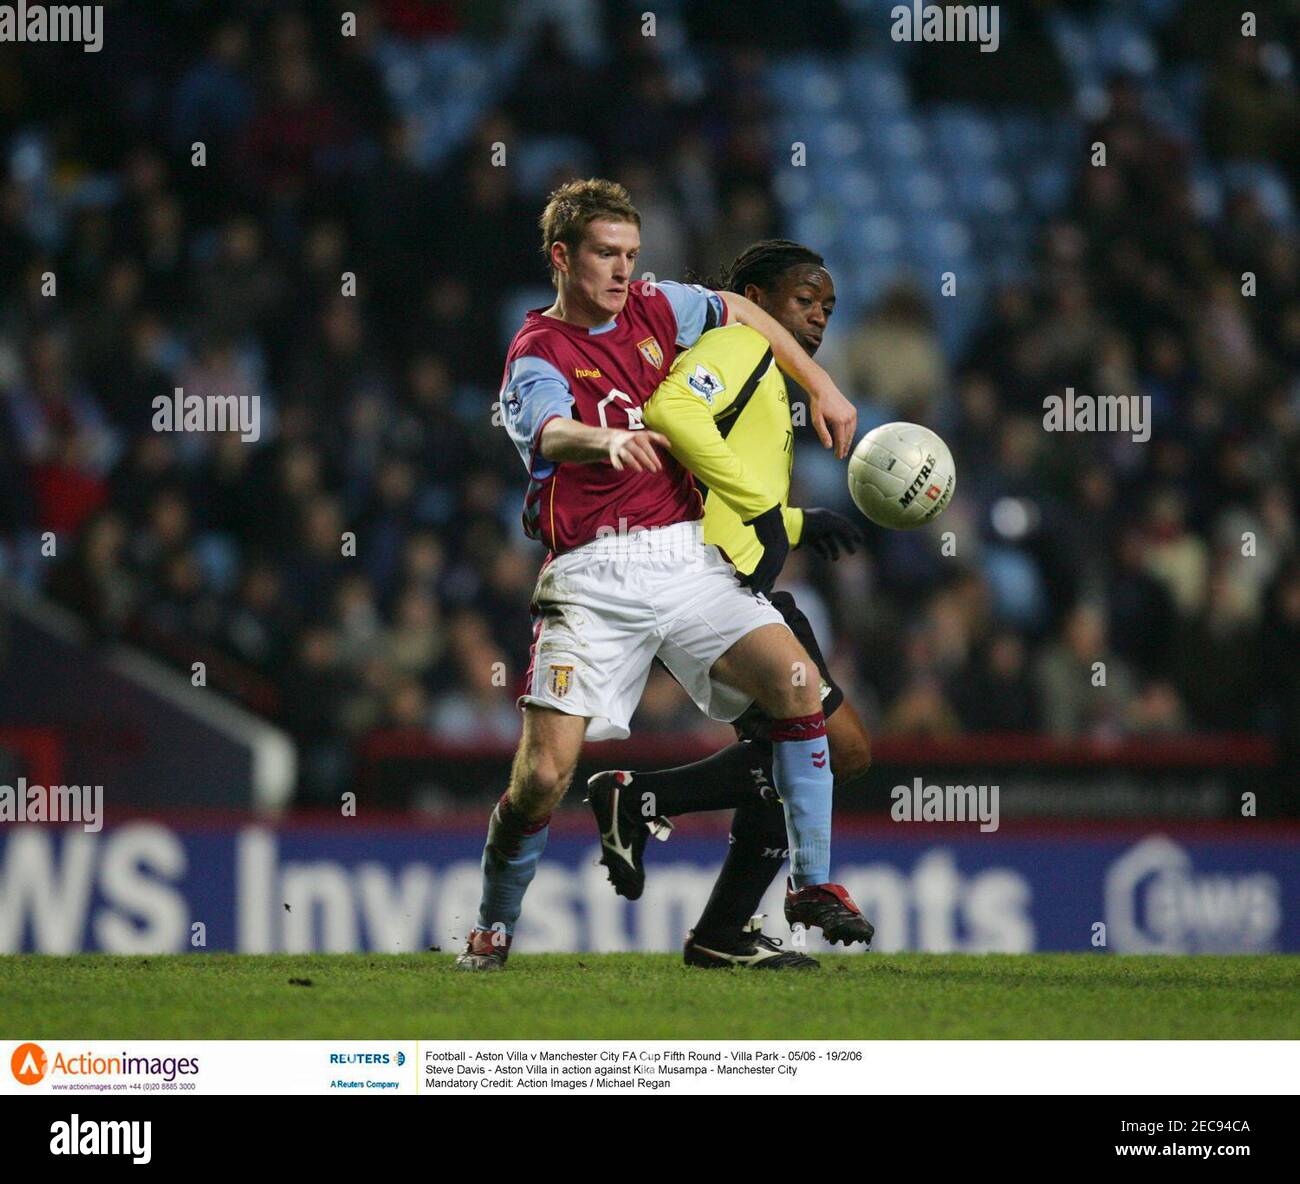 Football - Aston Villa v Manchester City FA Cup Fifth Round - Villa Park -  05/06 - 19/2/